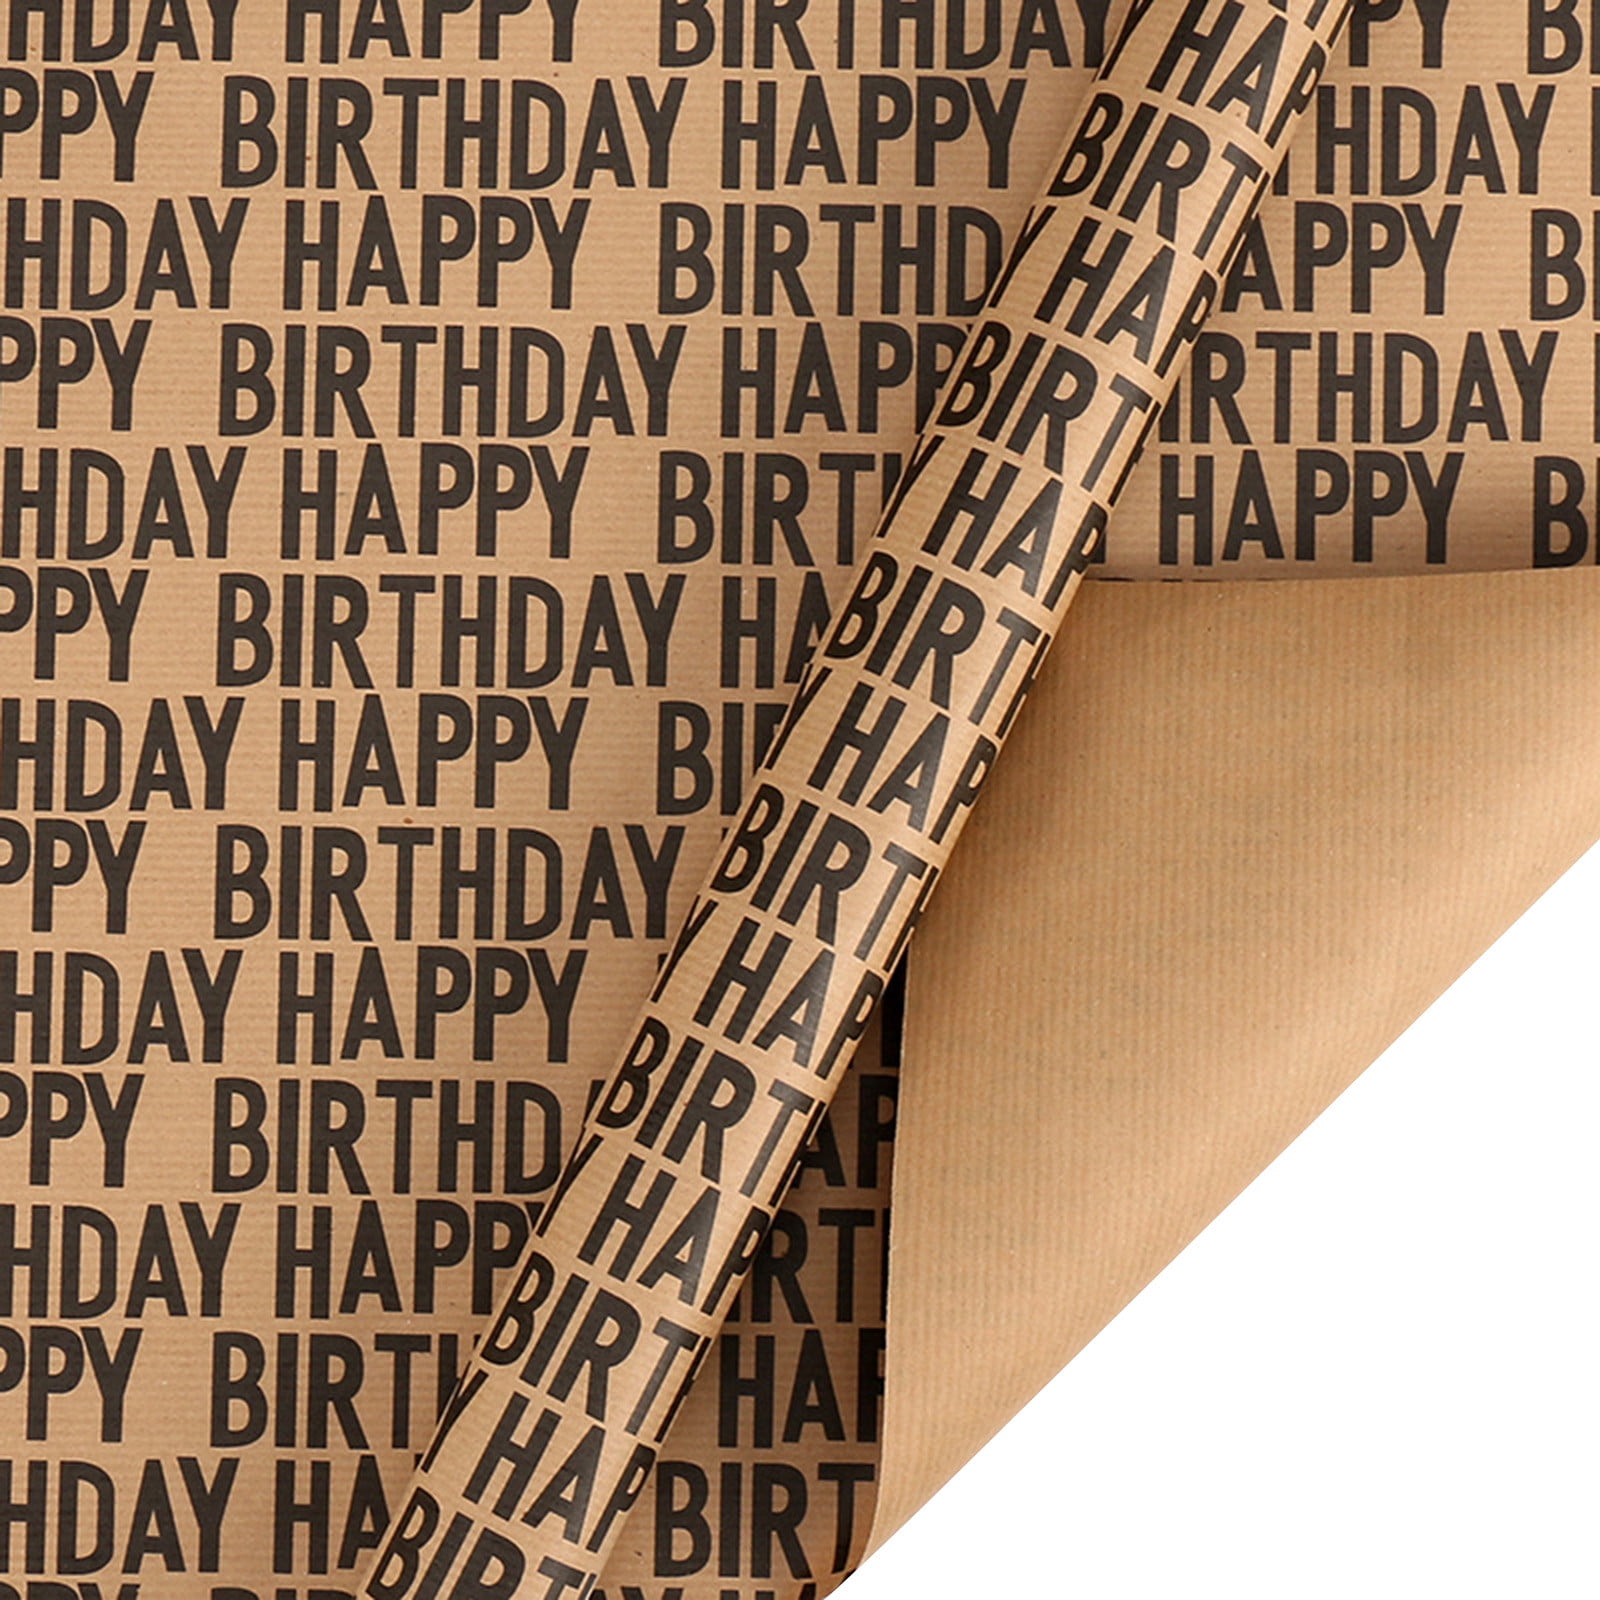 Happy Birthday Wrapping Paper, Zazzle